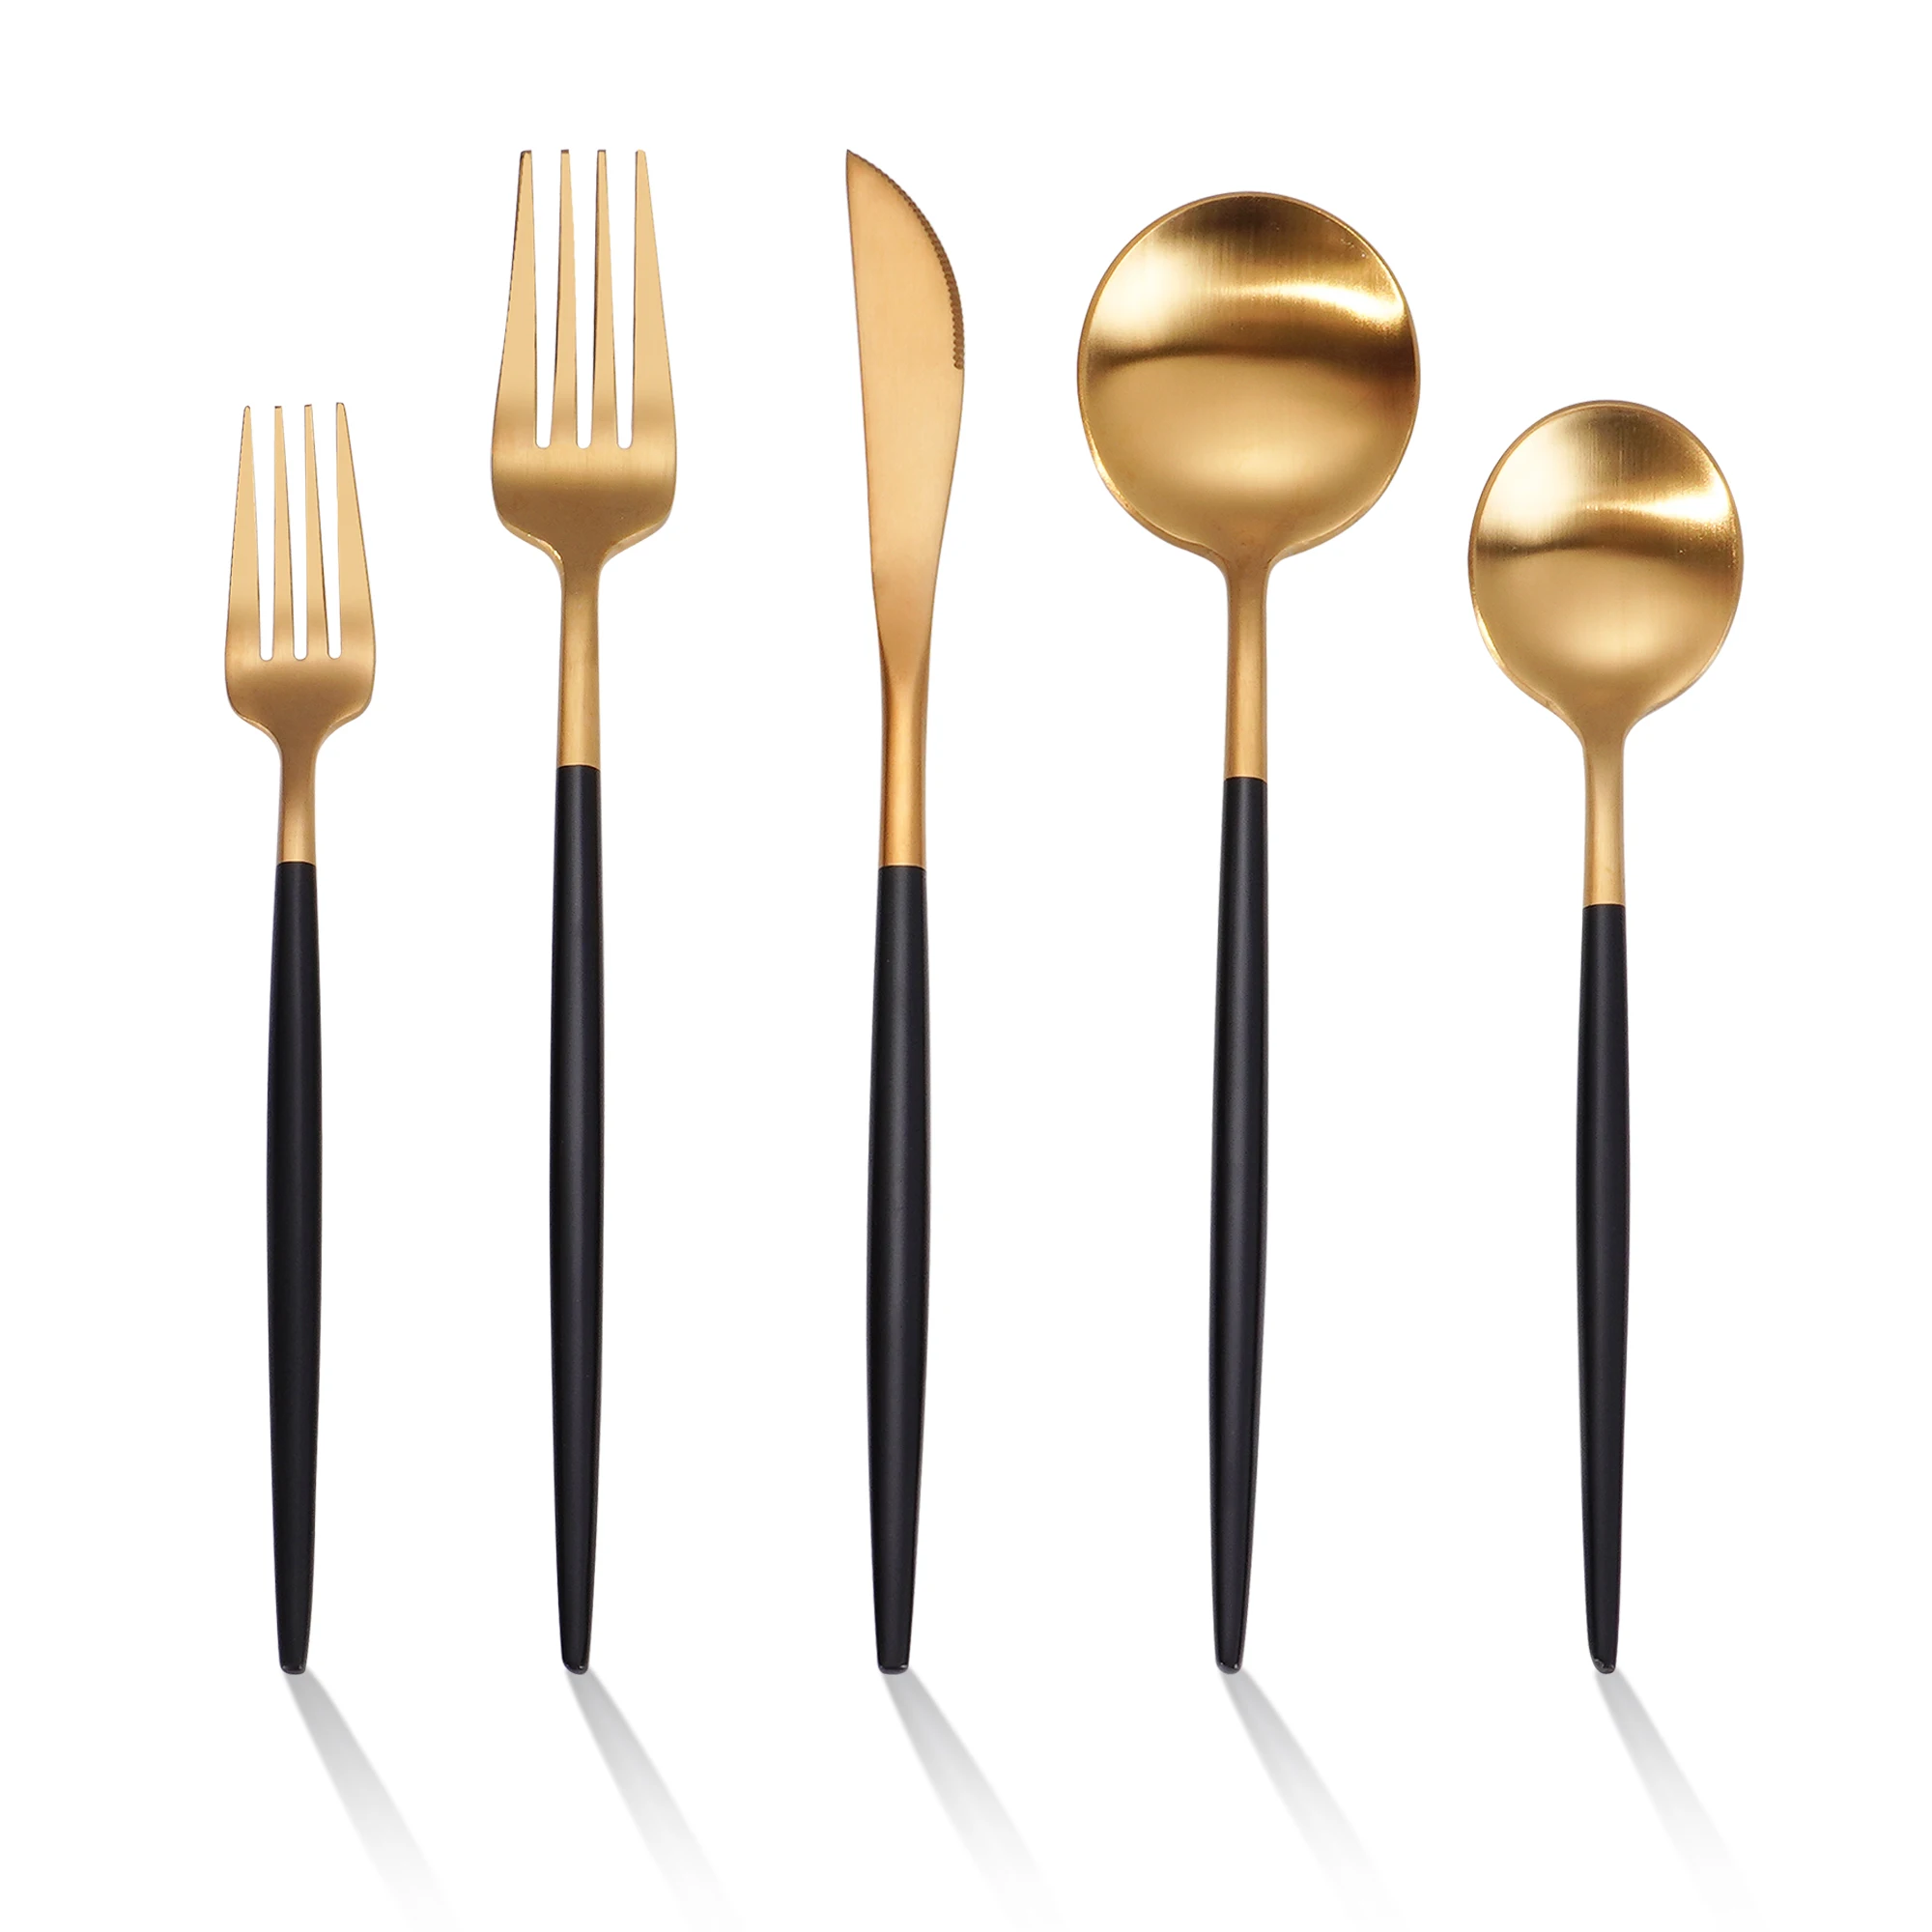 

Best Seller Portugal Knife Spoon Fork Kitchen Restaurant Wedding Luxury Flatware Stainless Steel Gold Cutlery Set Bestek, Silver, gold, rose gold, black, customizable